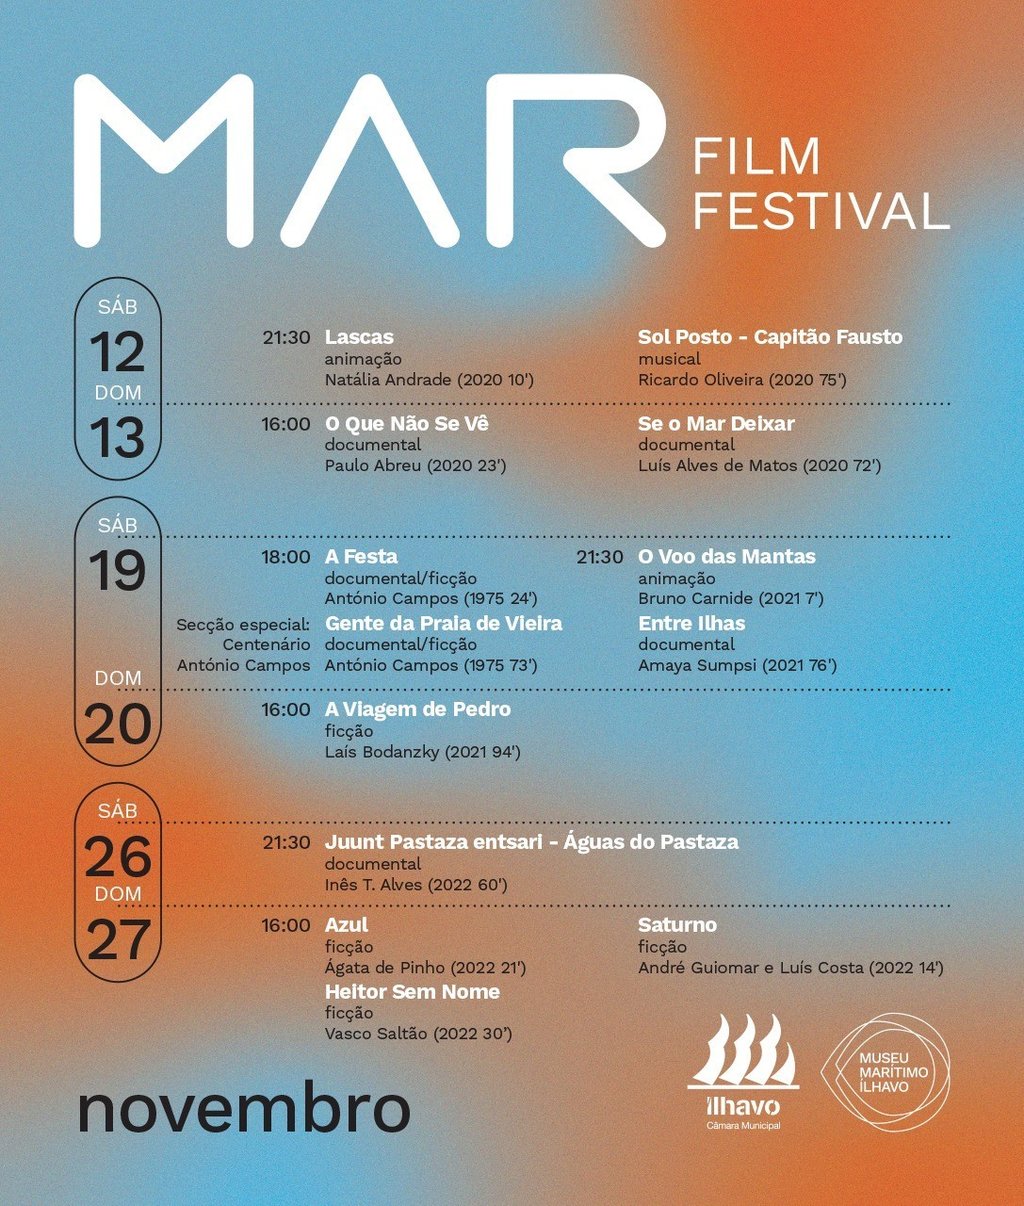 Programa completo Mar Film Festival 2022